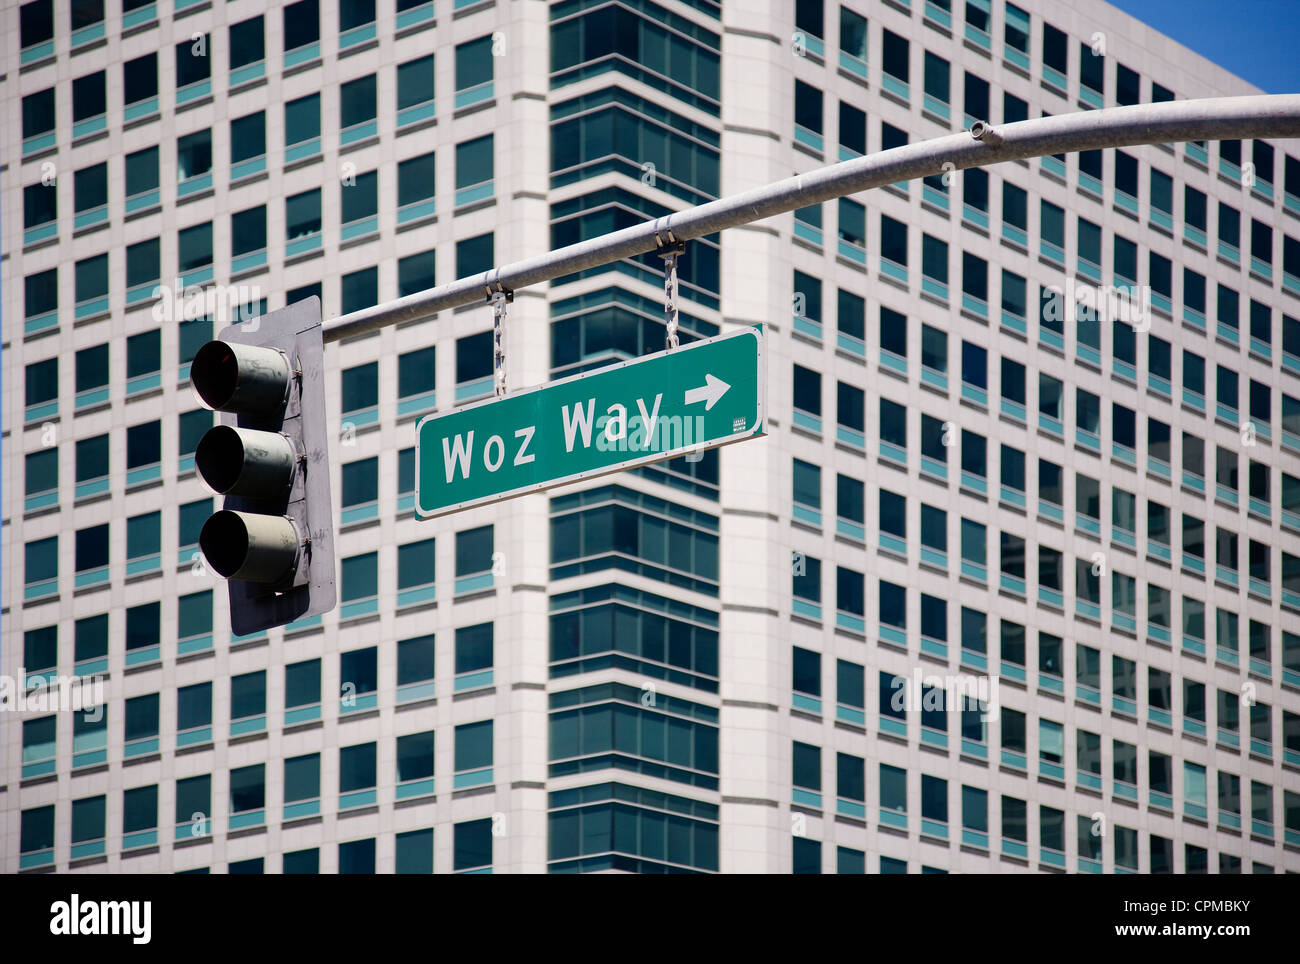 Woz Way. San Jose, California. Stock Photo